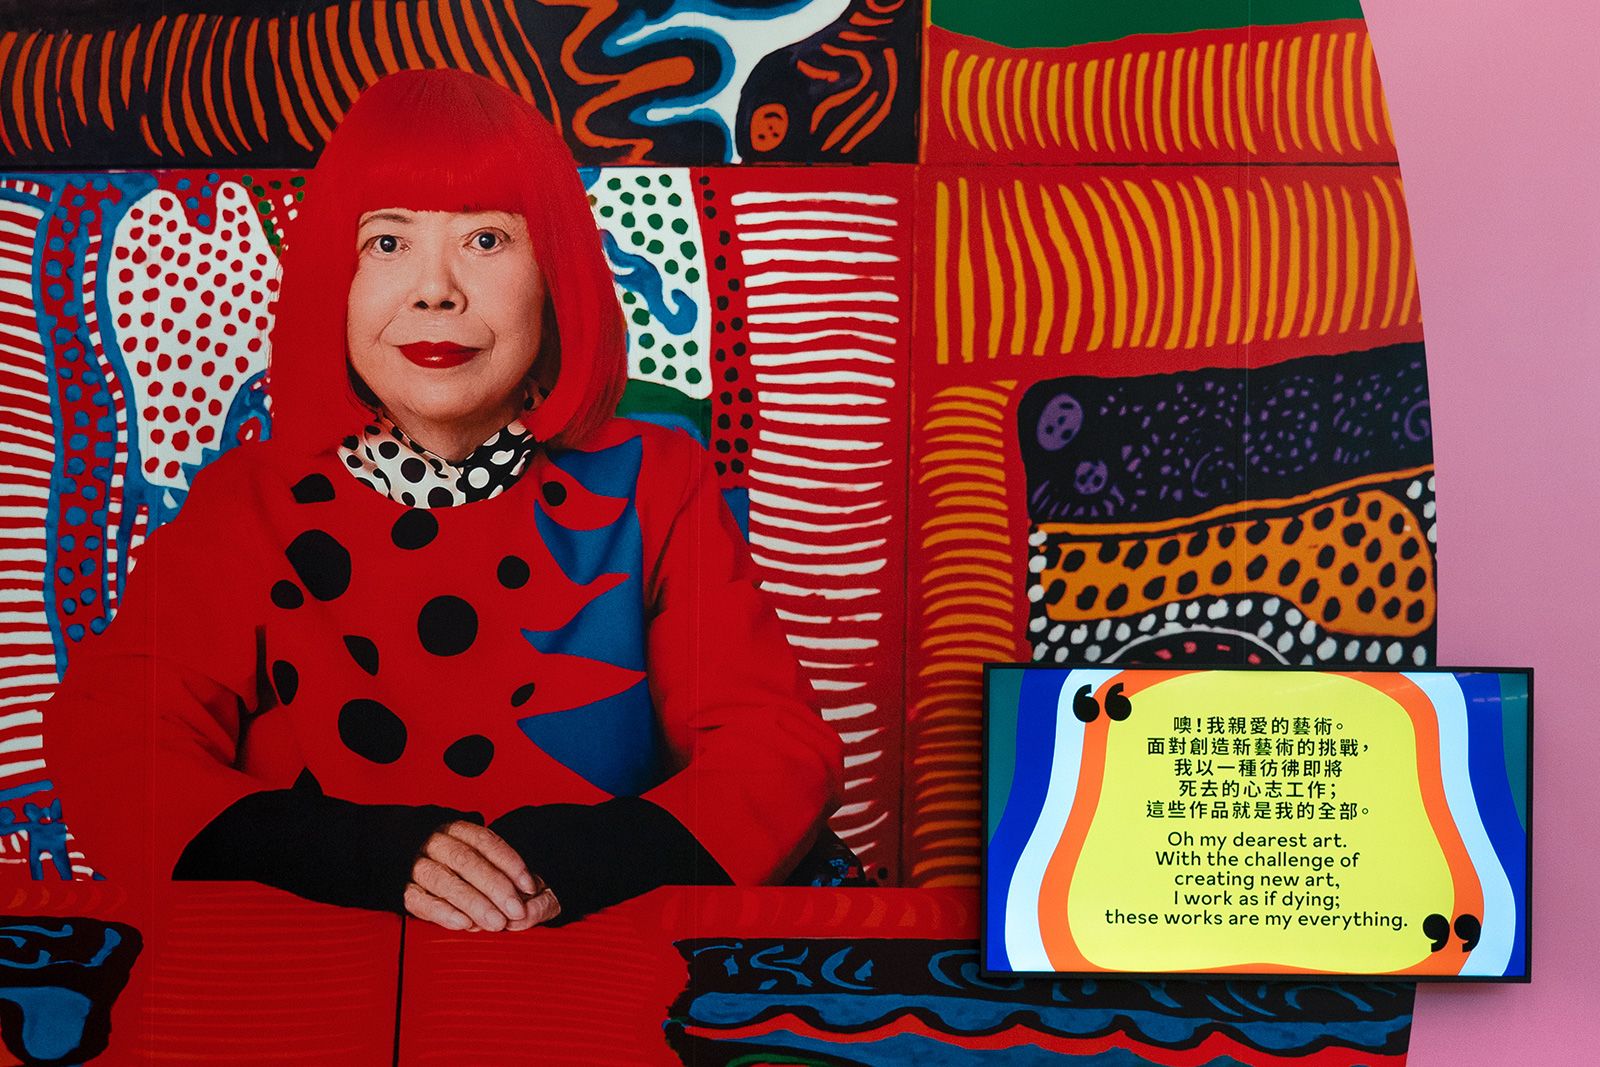 Yayoi Kusama's Fashion, Design Work to Get Focus in New Retrospective